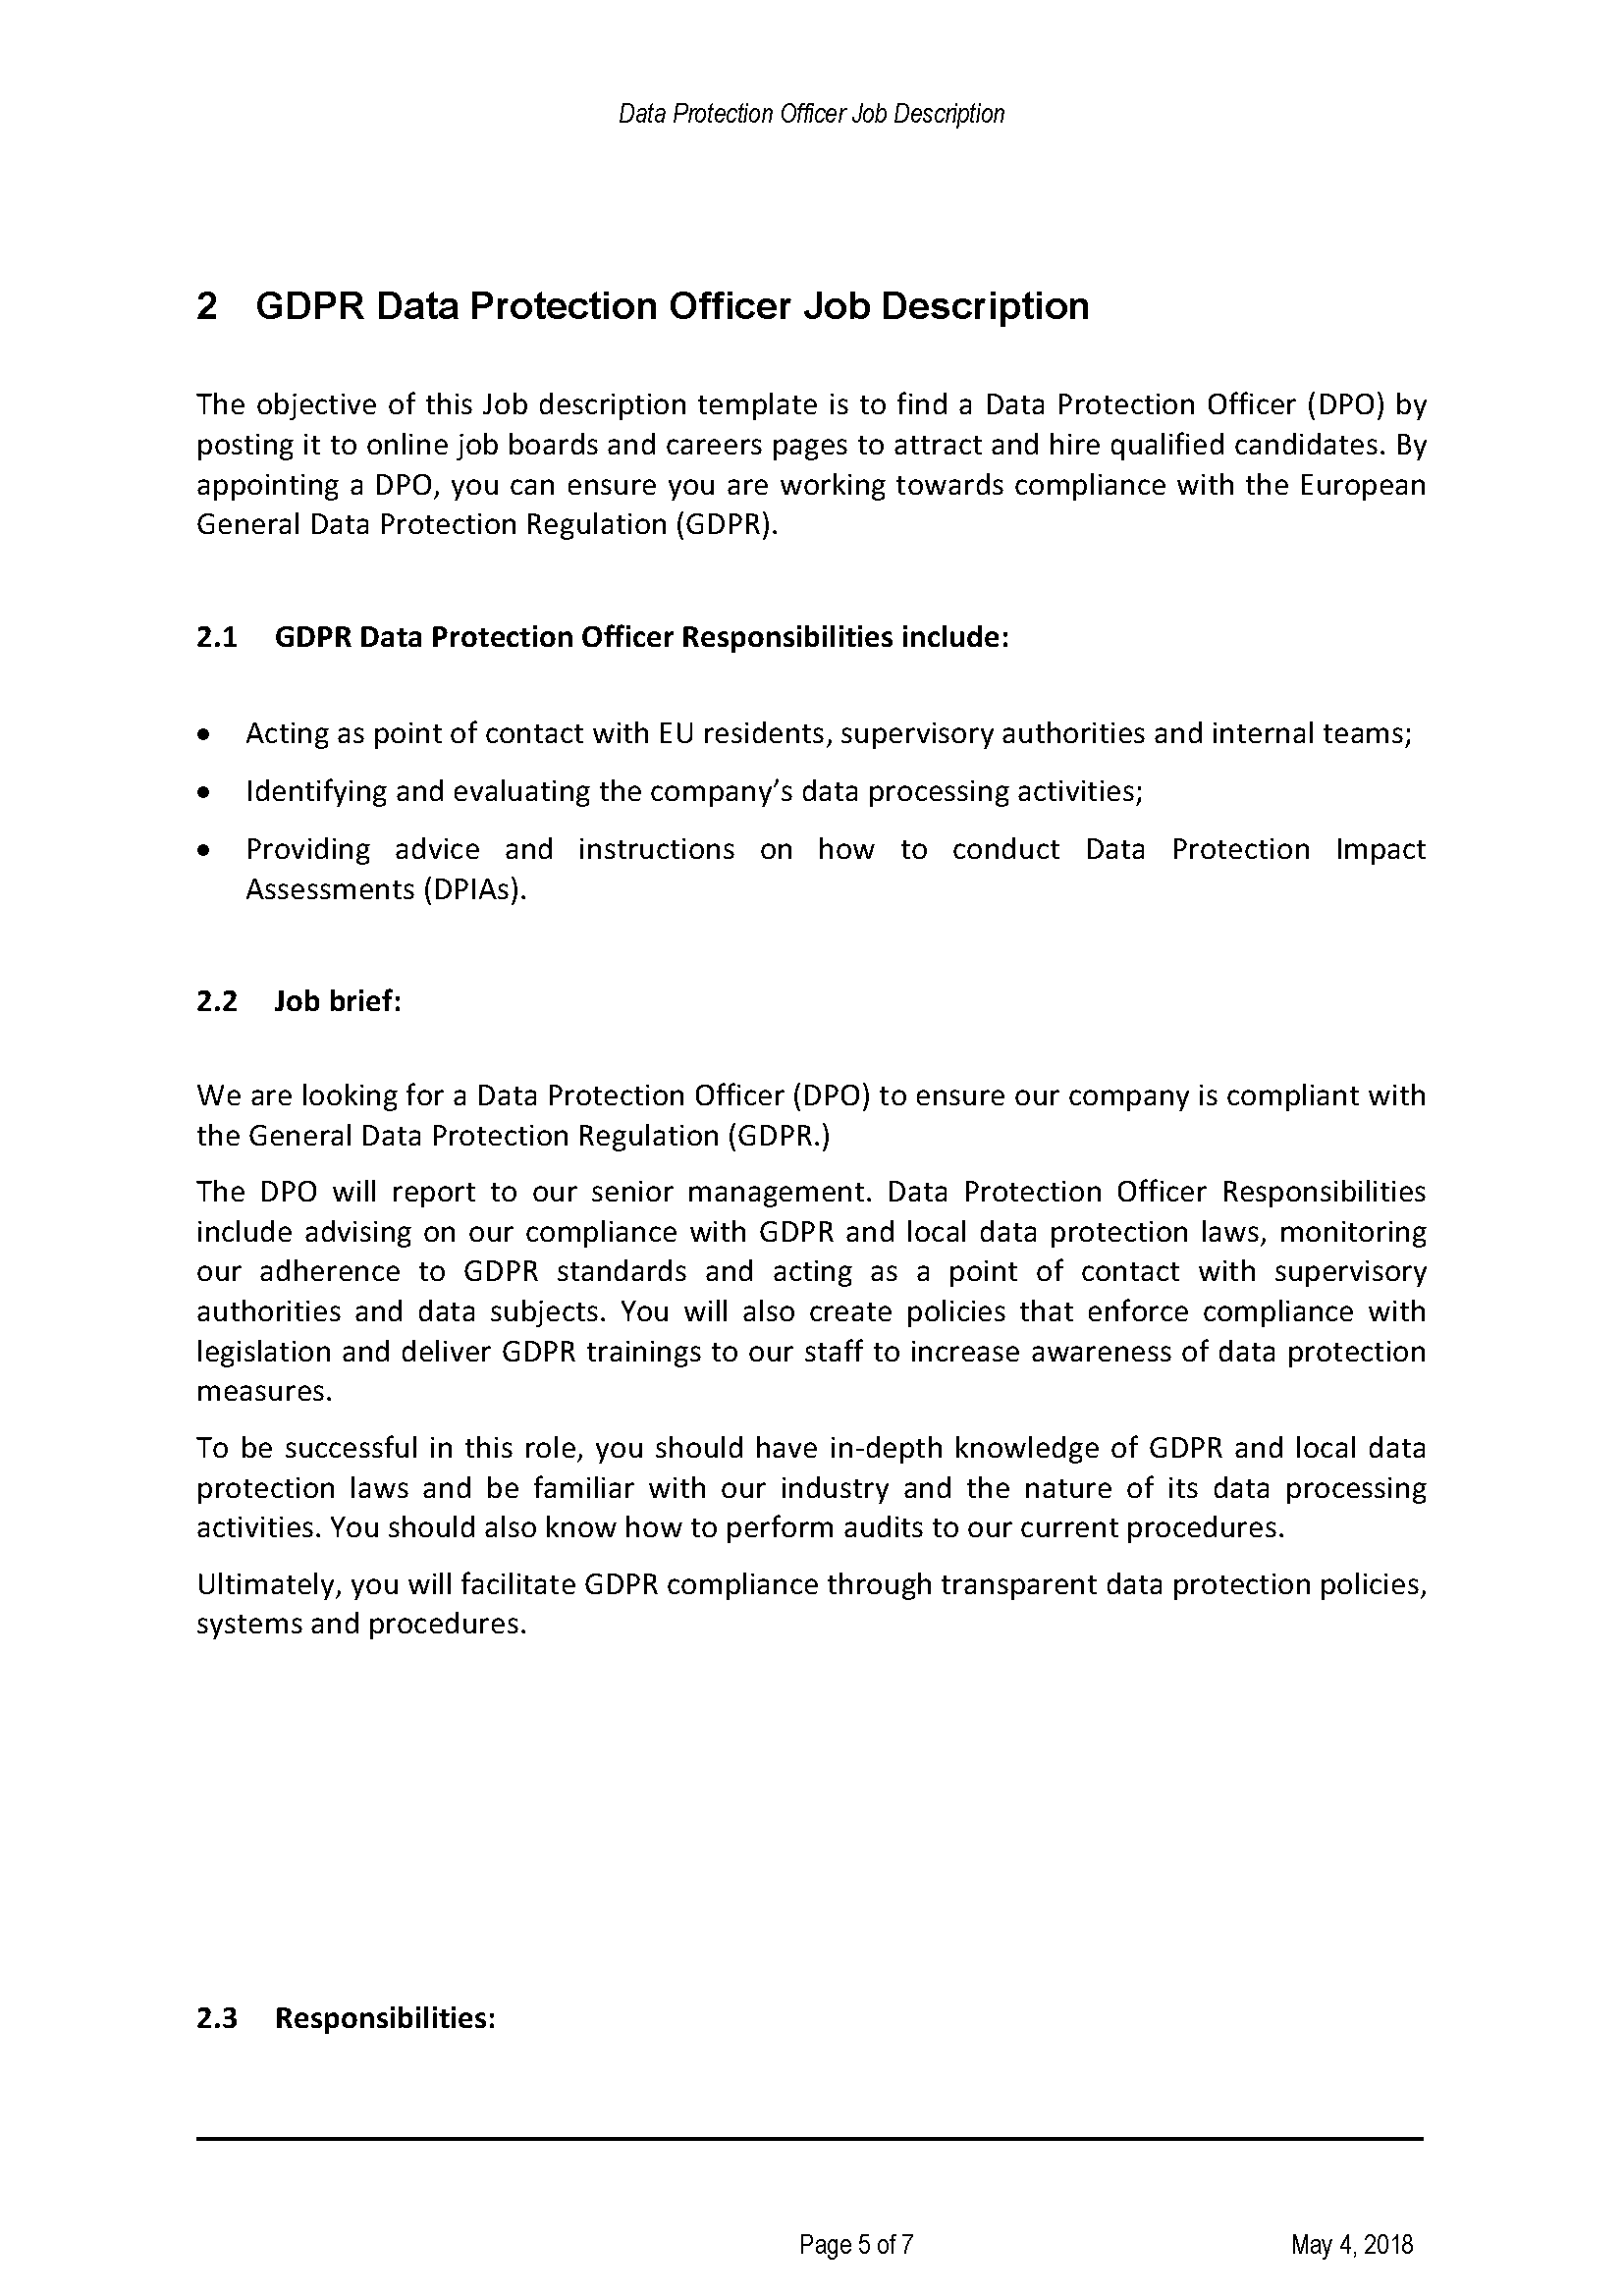 GDPR Data Protection Officer Job Description main image